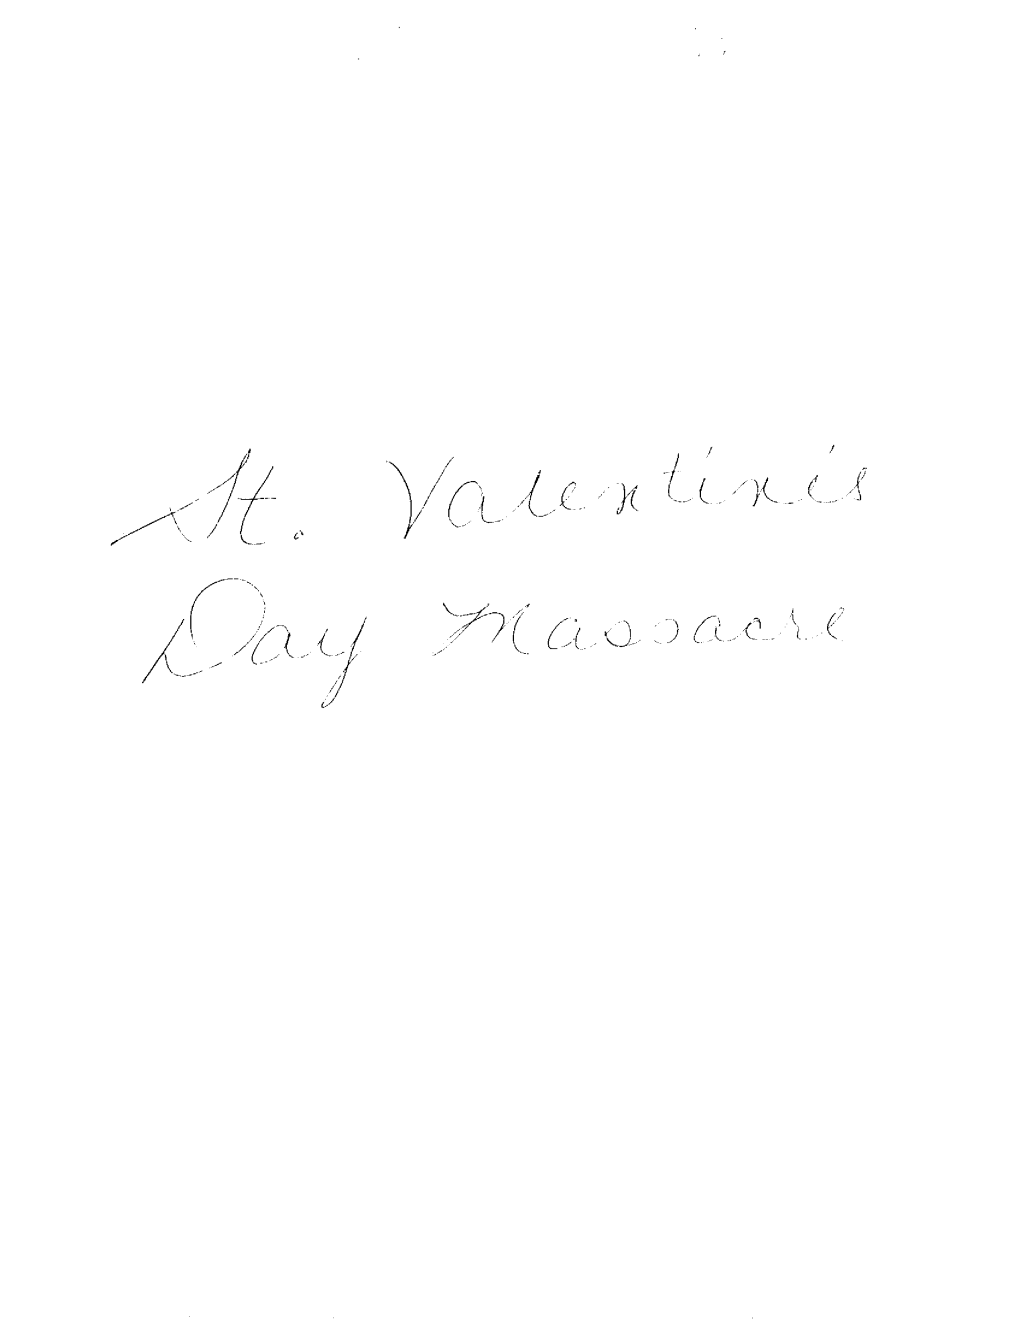 St Valentines Day Massacre Part 1 of 2